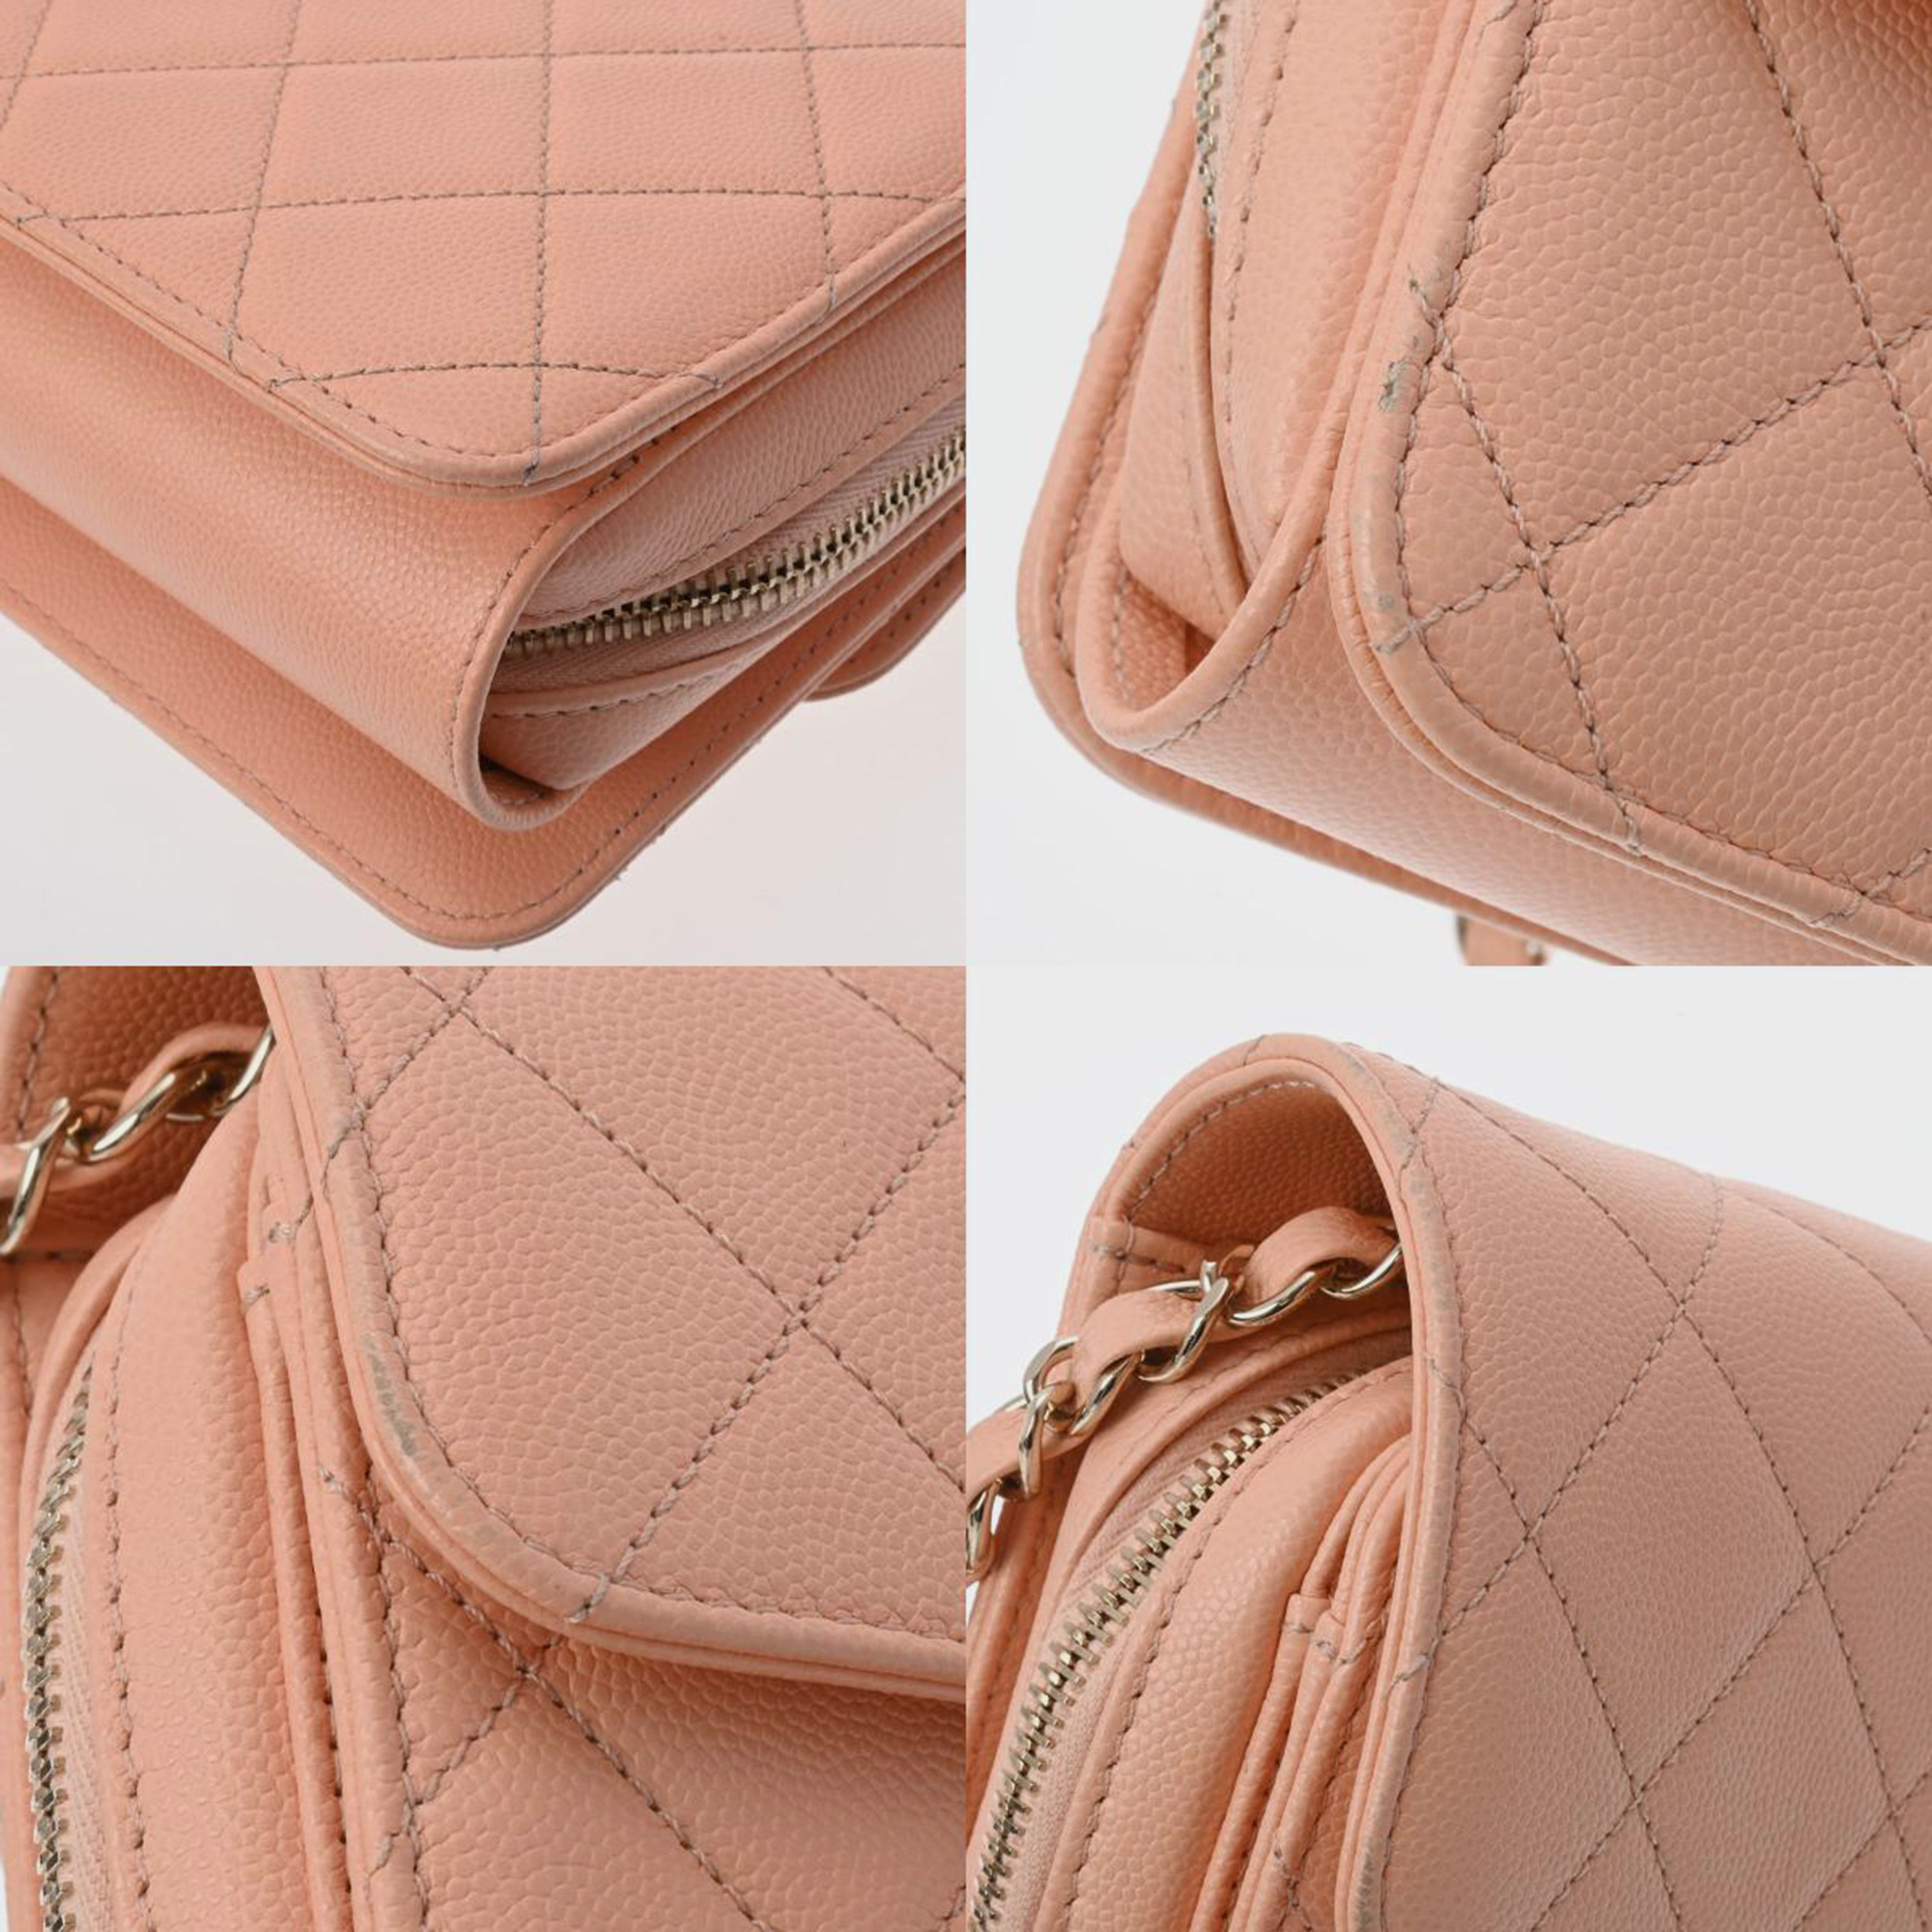 Chanel Pink Leather Mini Flap Bag